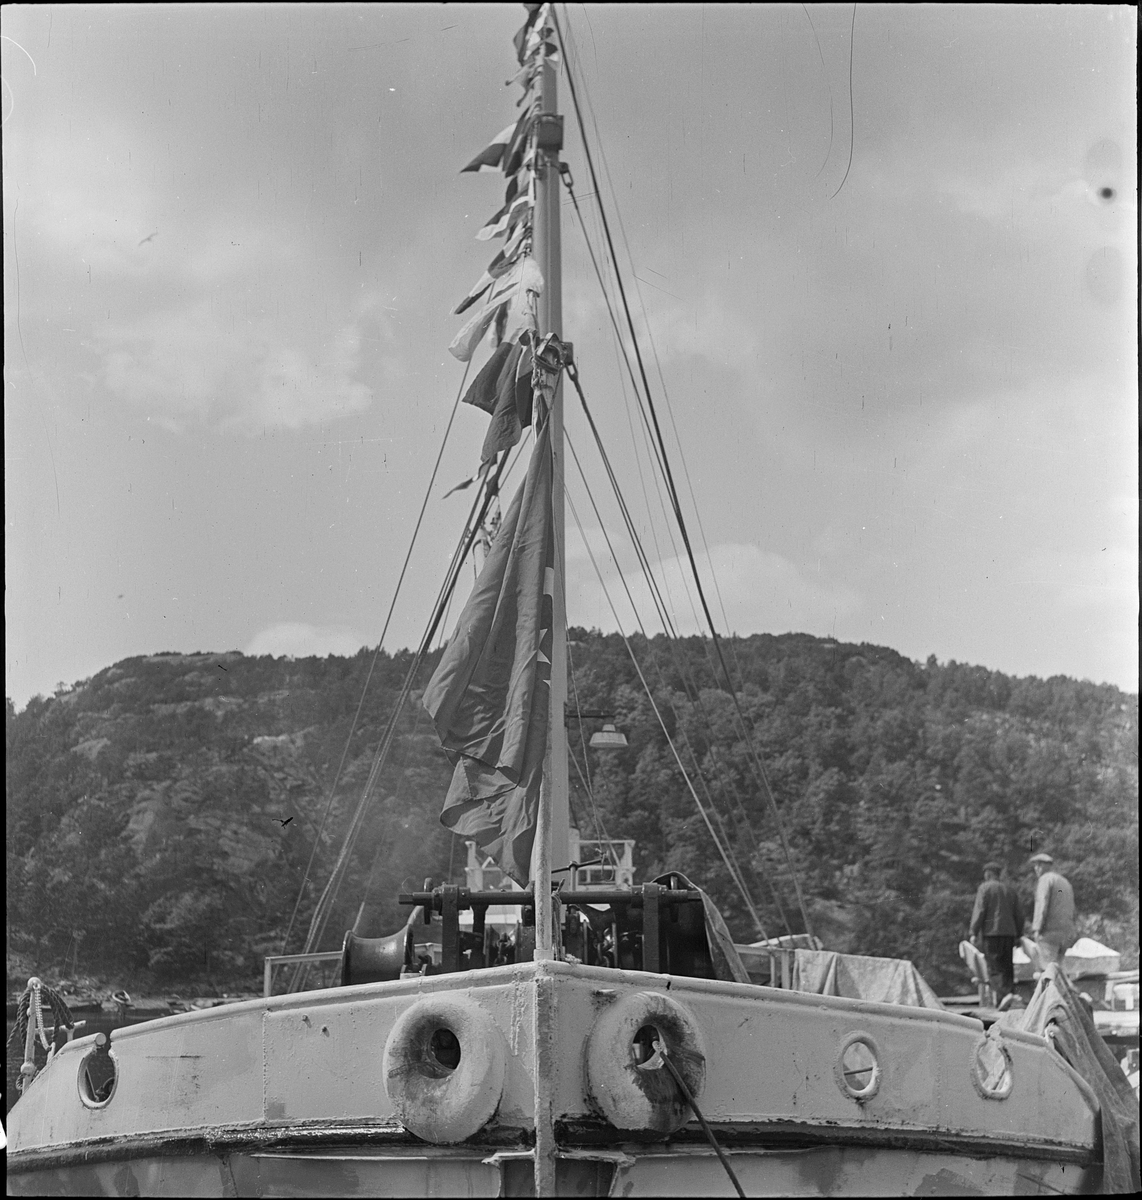 Stykkgodsskipet "M/S Rytter" ved kai i Egersund. Skipet er pyntet med vimpler.